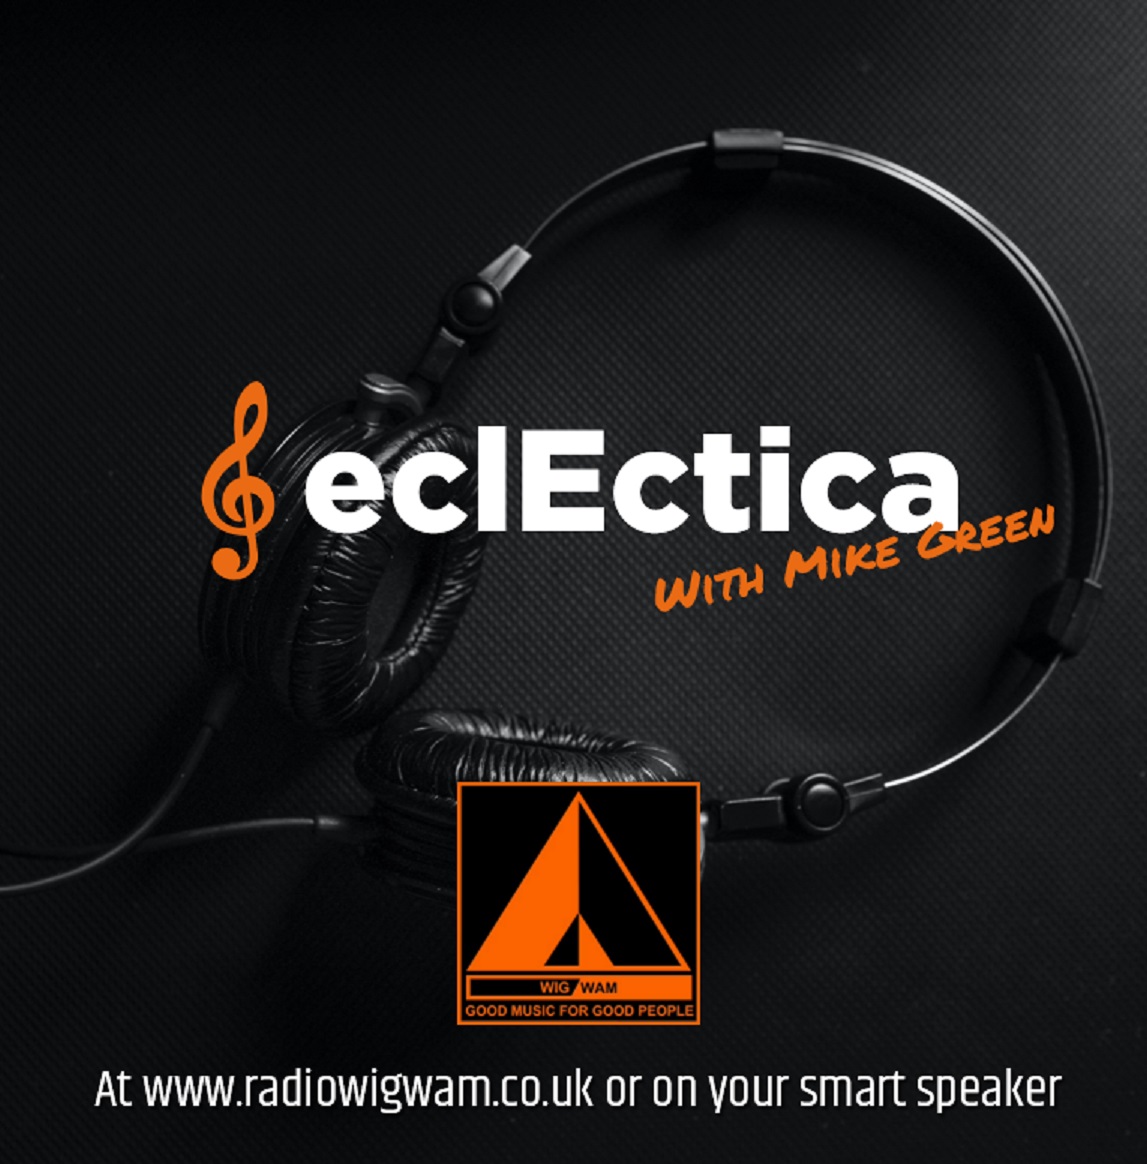 Brand new Eclectica: Sunday 7pm UK, 8pm CET in Europe, 7pm EST in the Americas. Listen at: radiowigwam.co.uk

With @TheYellowLlama1 @SayYesDoNothin1 @PullFingerMctn @H2whoaMusic @SonicProperty @MorningTourist @redzephyr2 @GavinJDavies @BandFlint